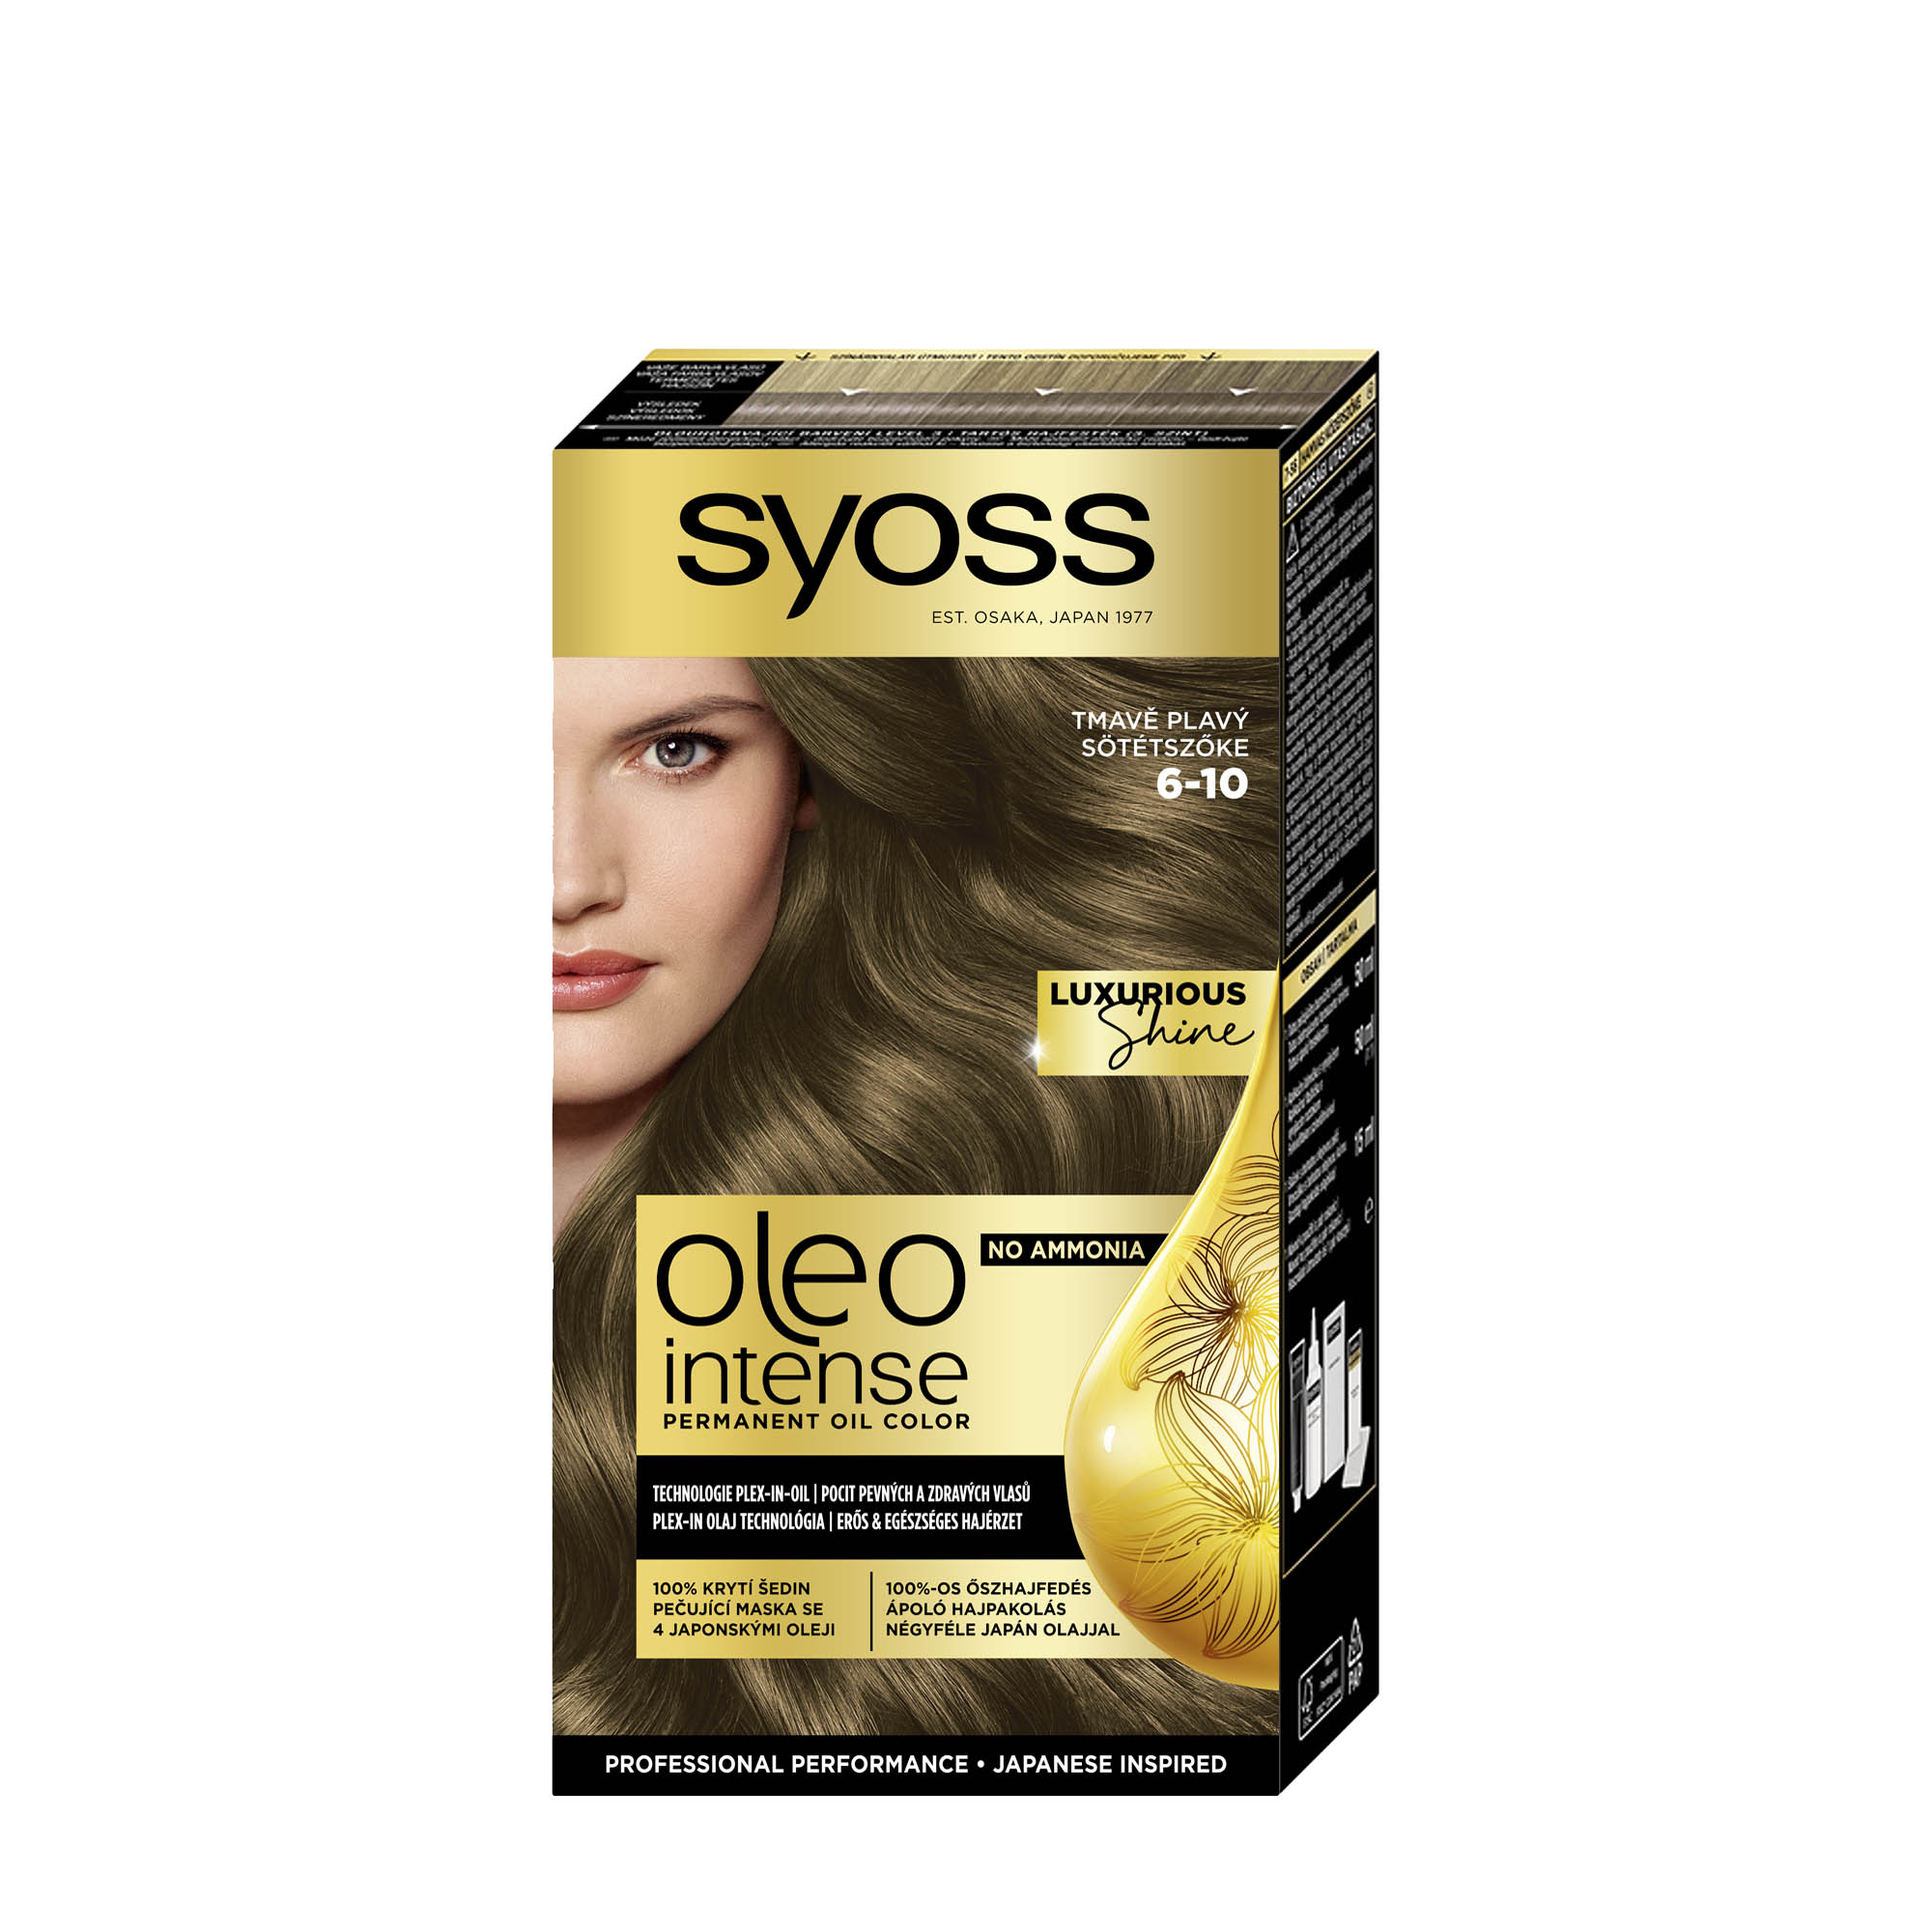 syoss oleo intense permanent oil color 6-10 dark blonde